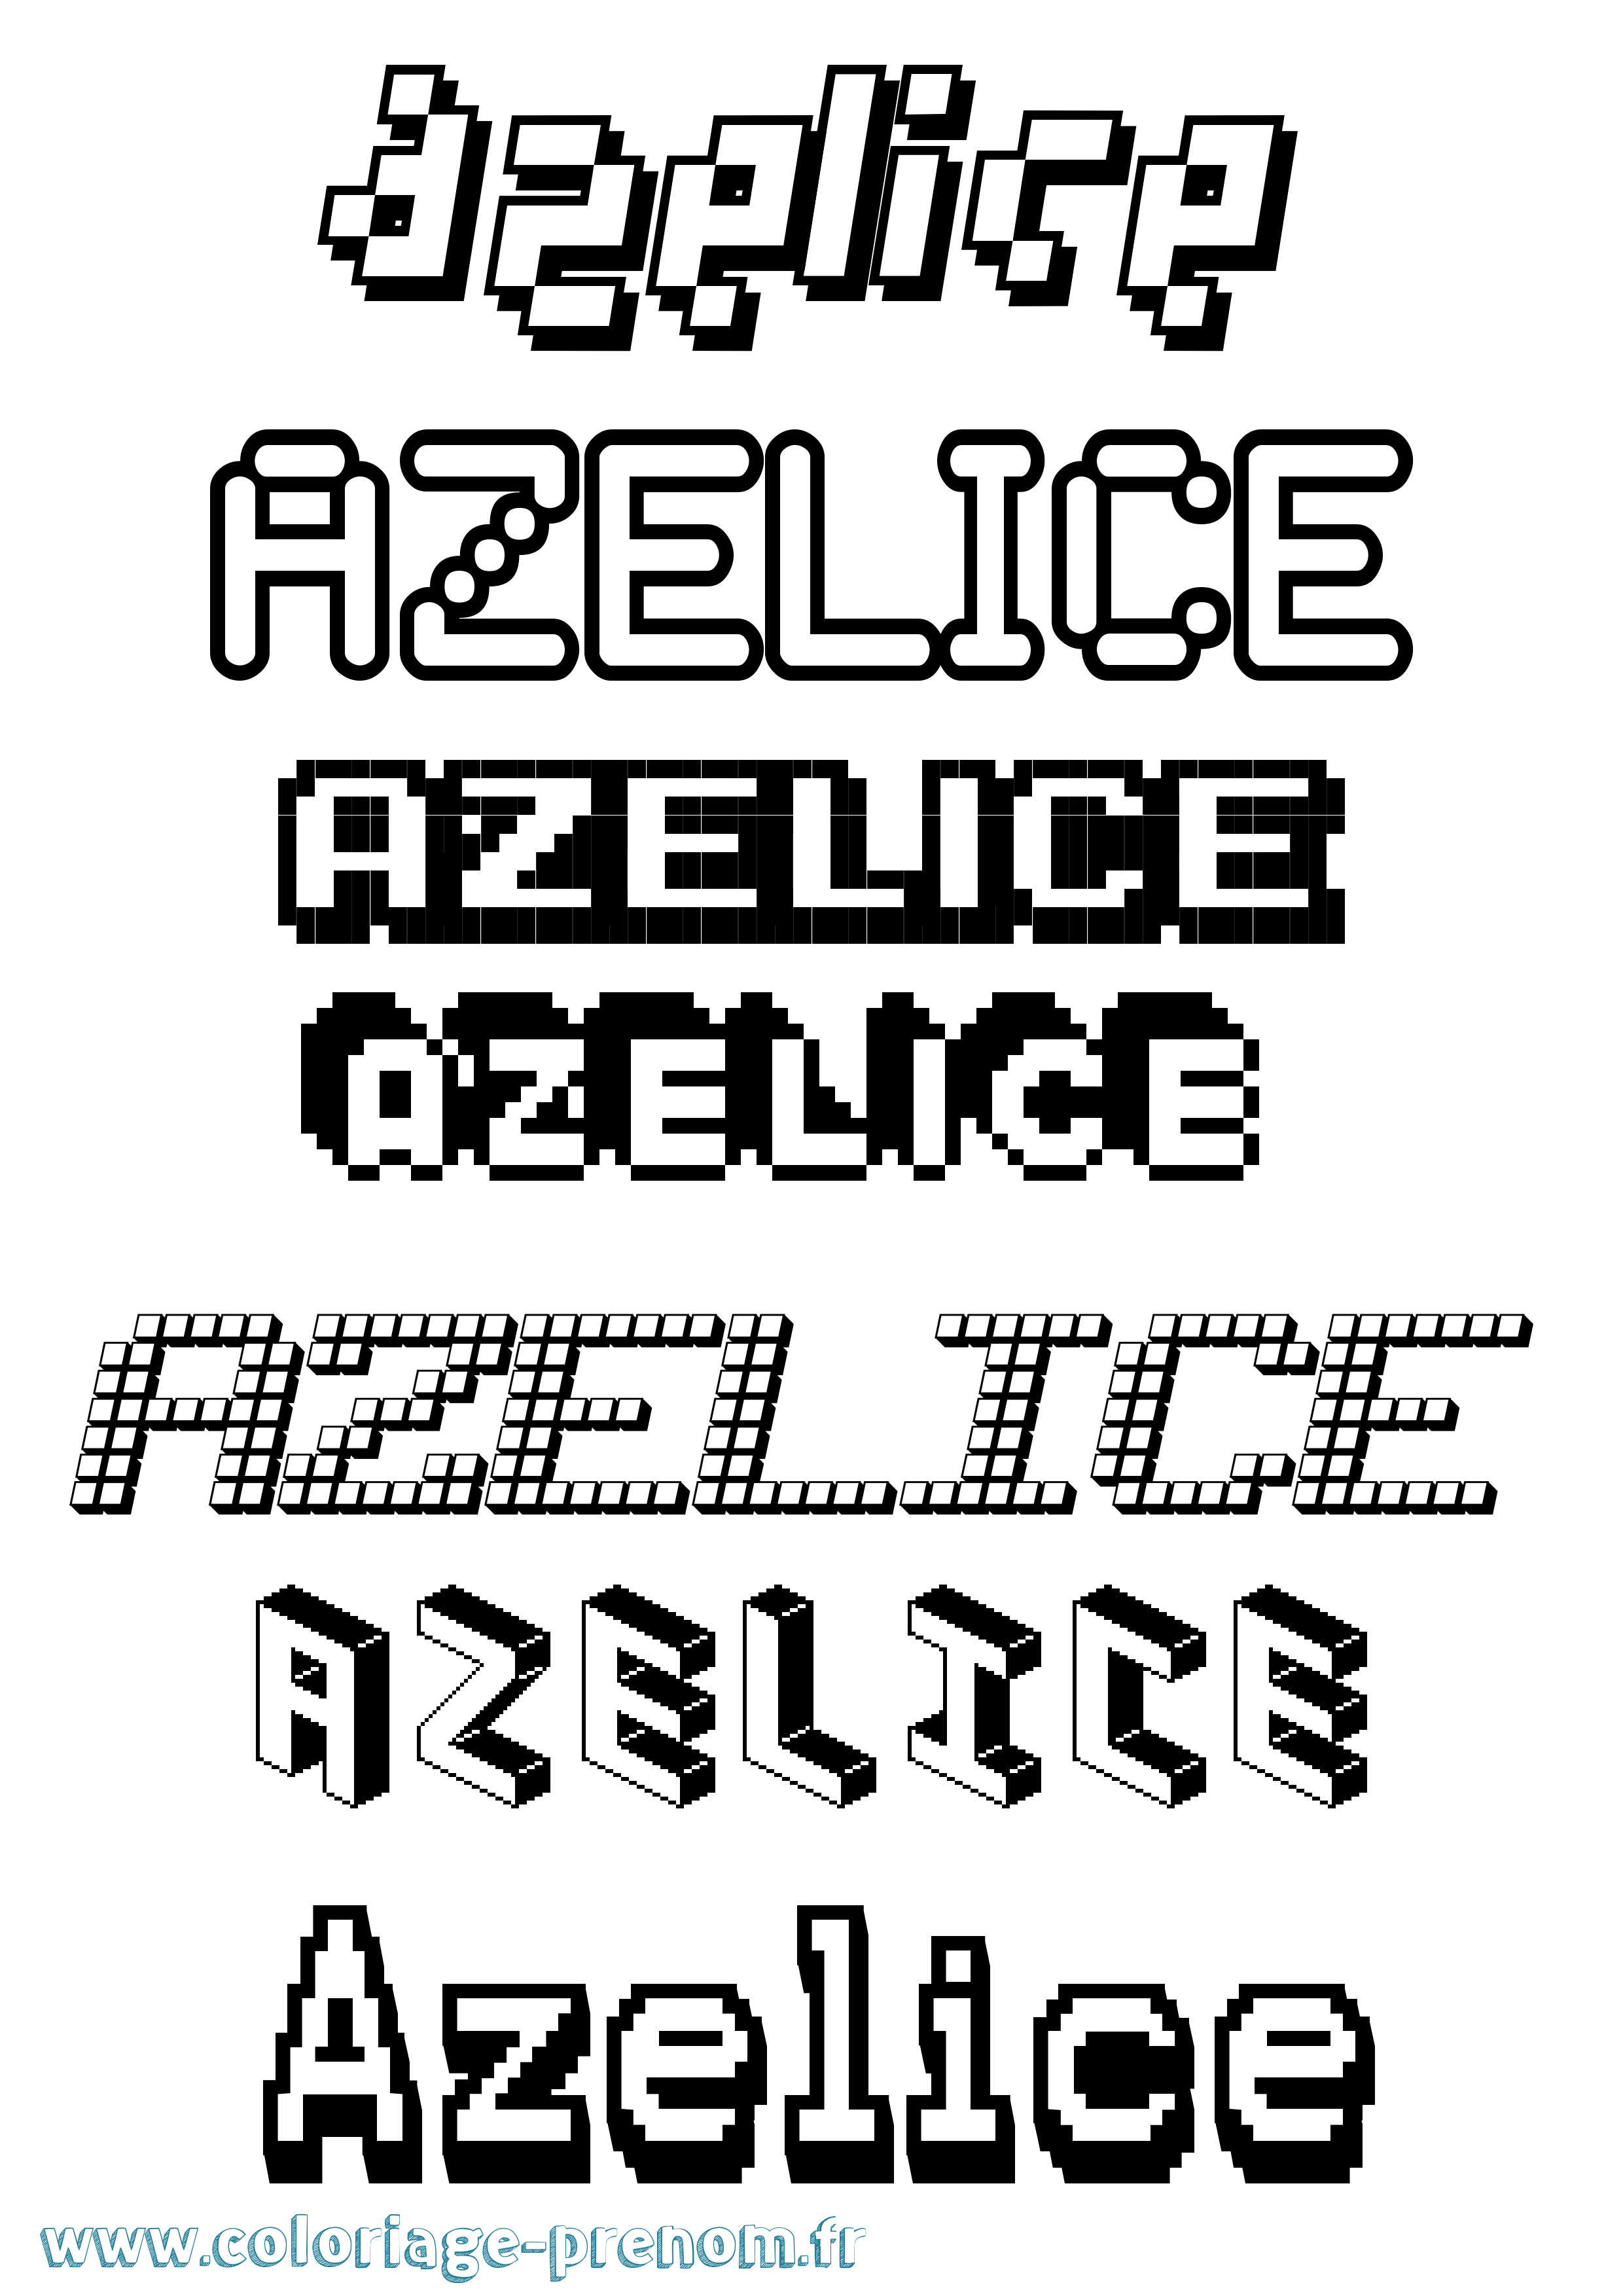 Coloriage prénom Azelice Pixel